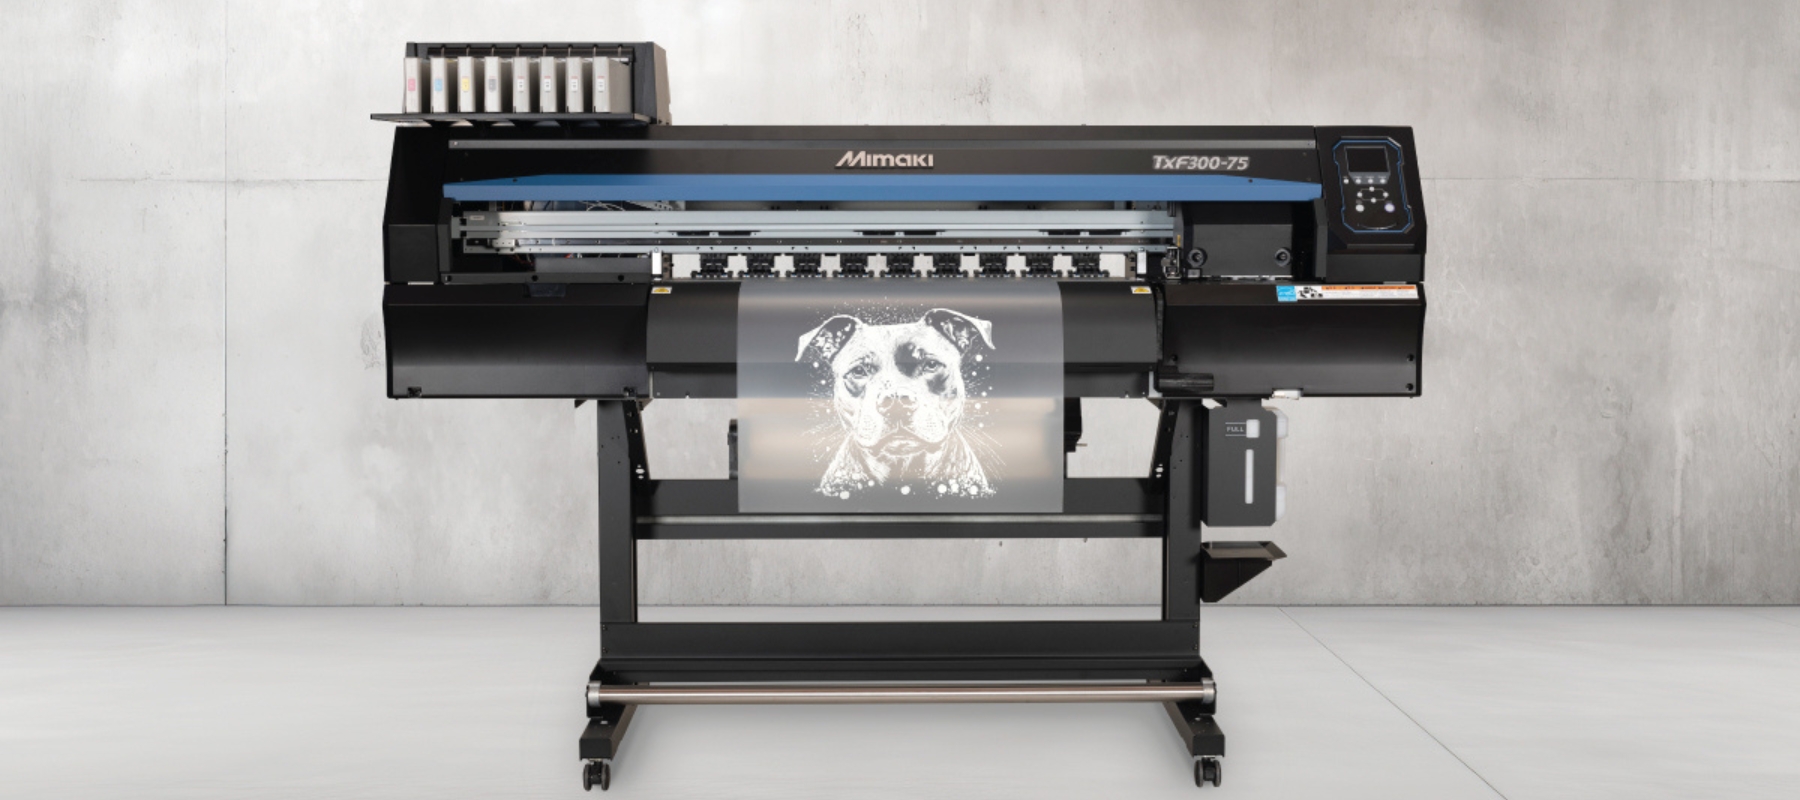 New Mimaki TxF300-75 direct to film printer